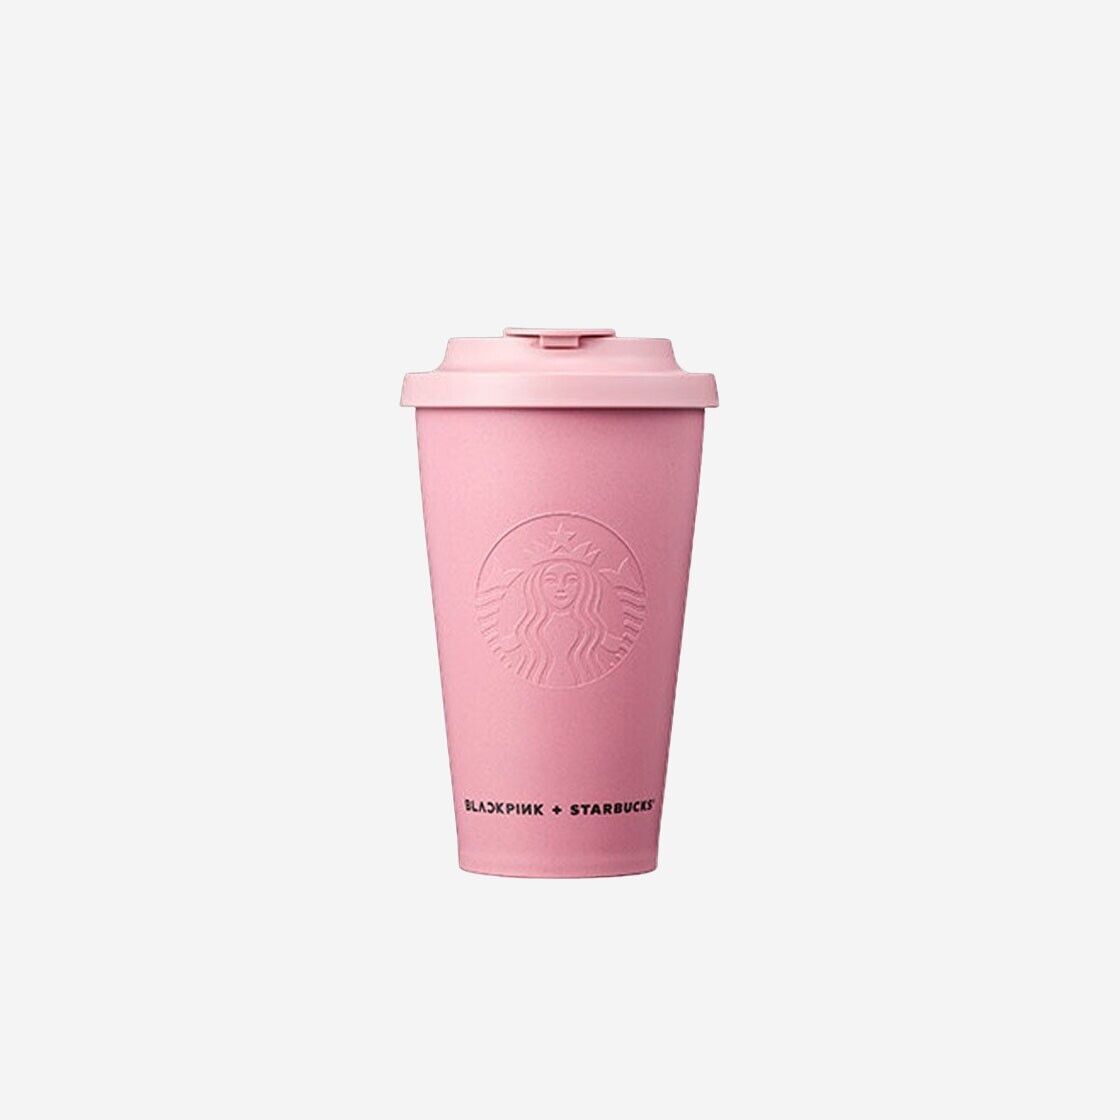 Starbucks x Blackpink Pink Tumbler 458ml